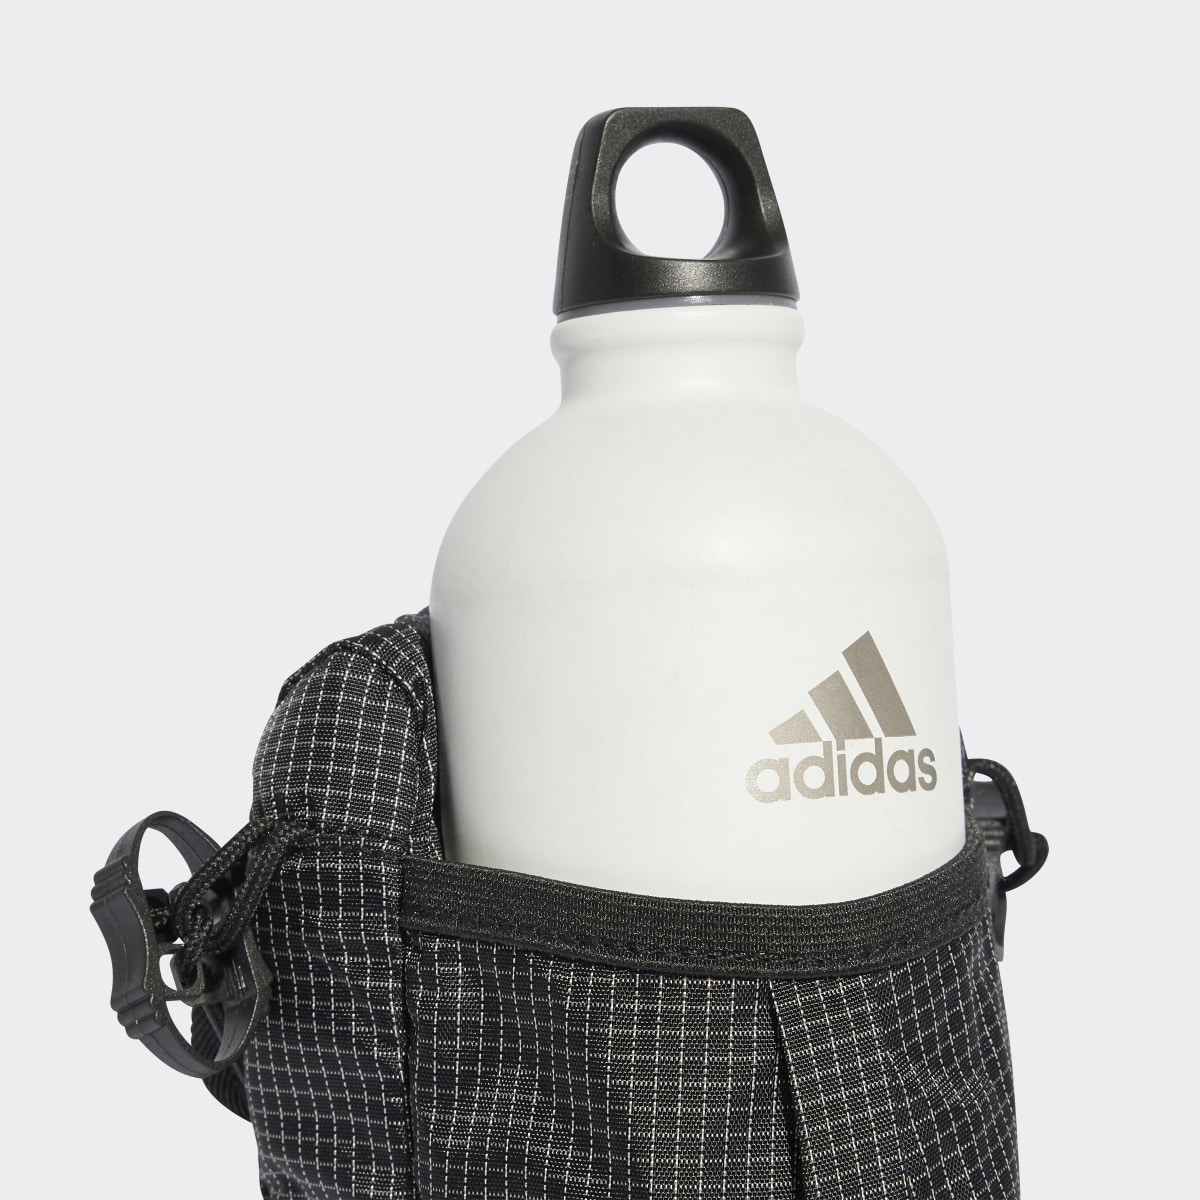 Adidas Adventure Flag Bag Small. 6